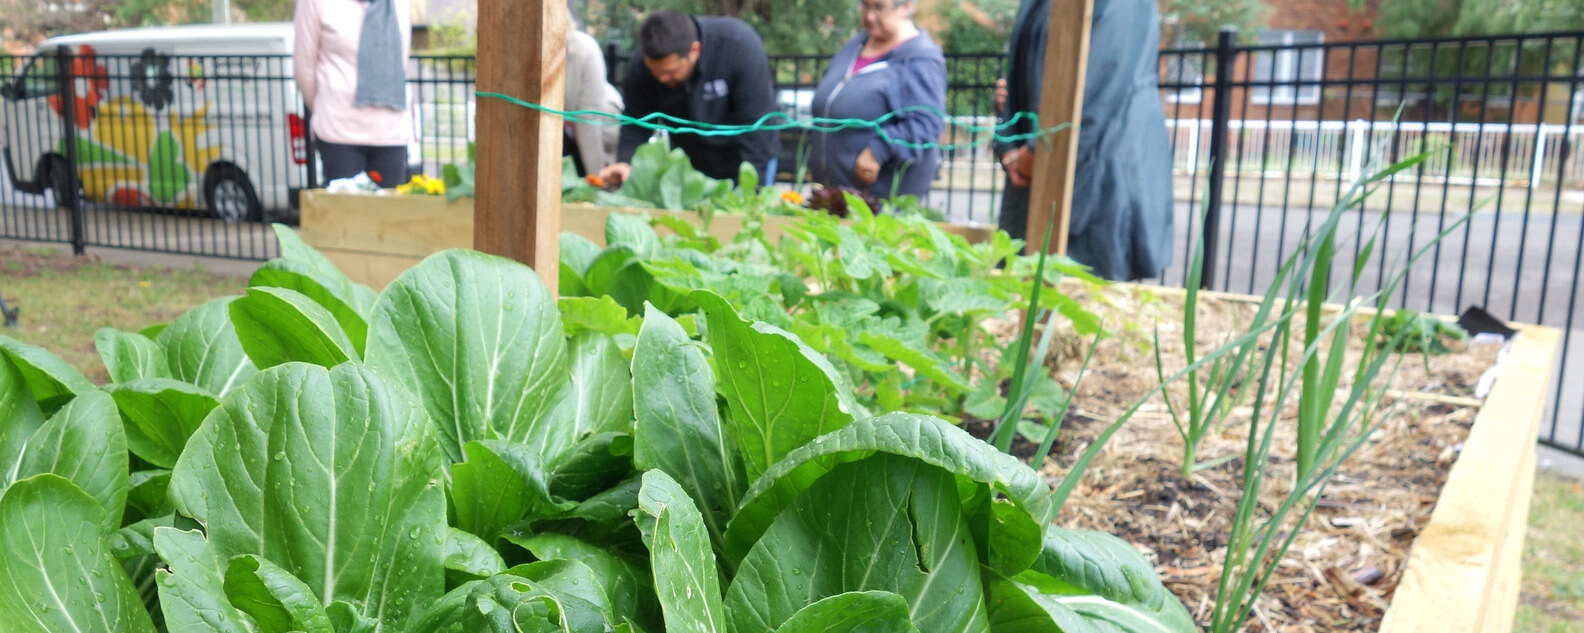 group planting vegetables